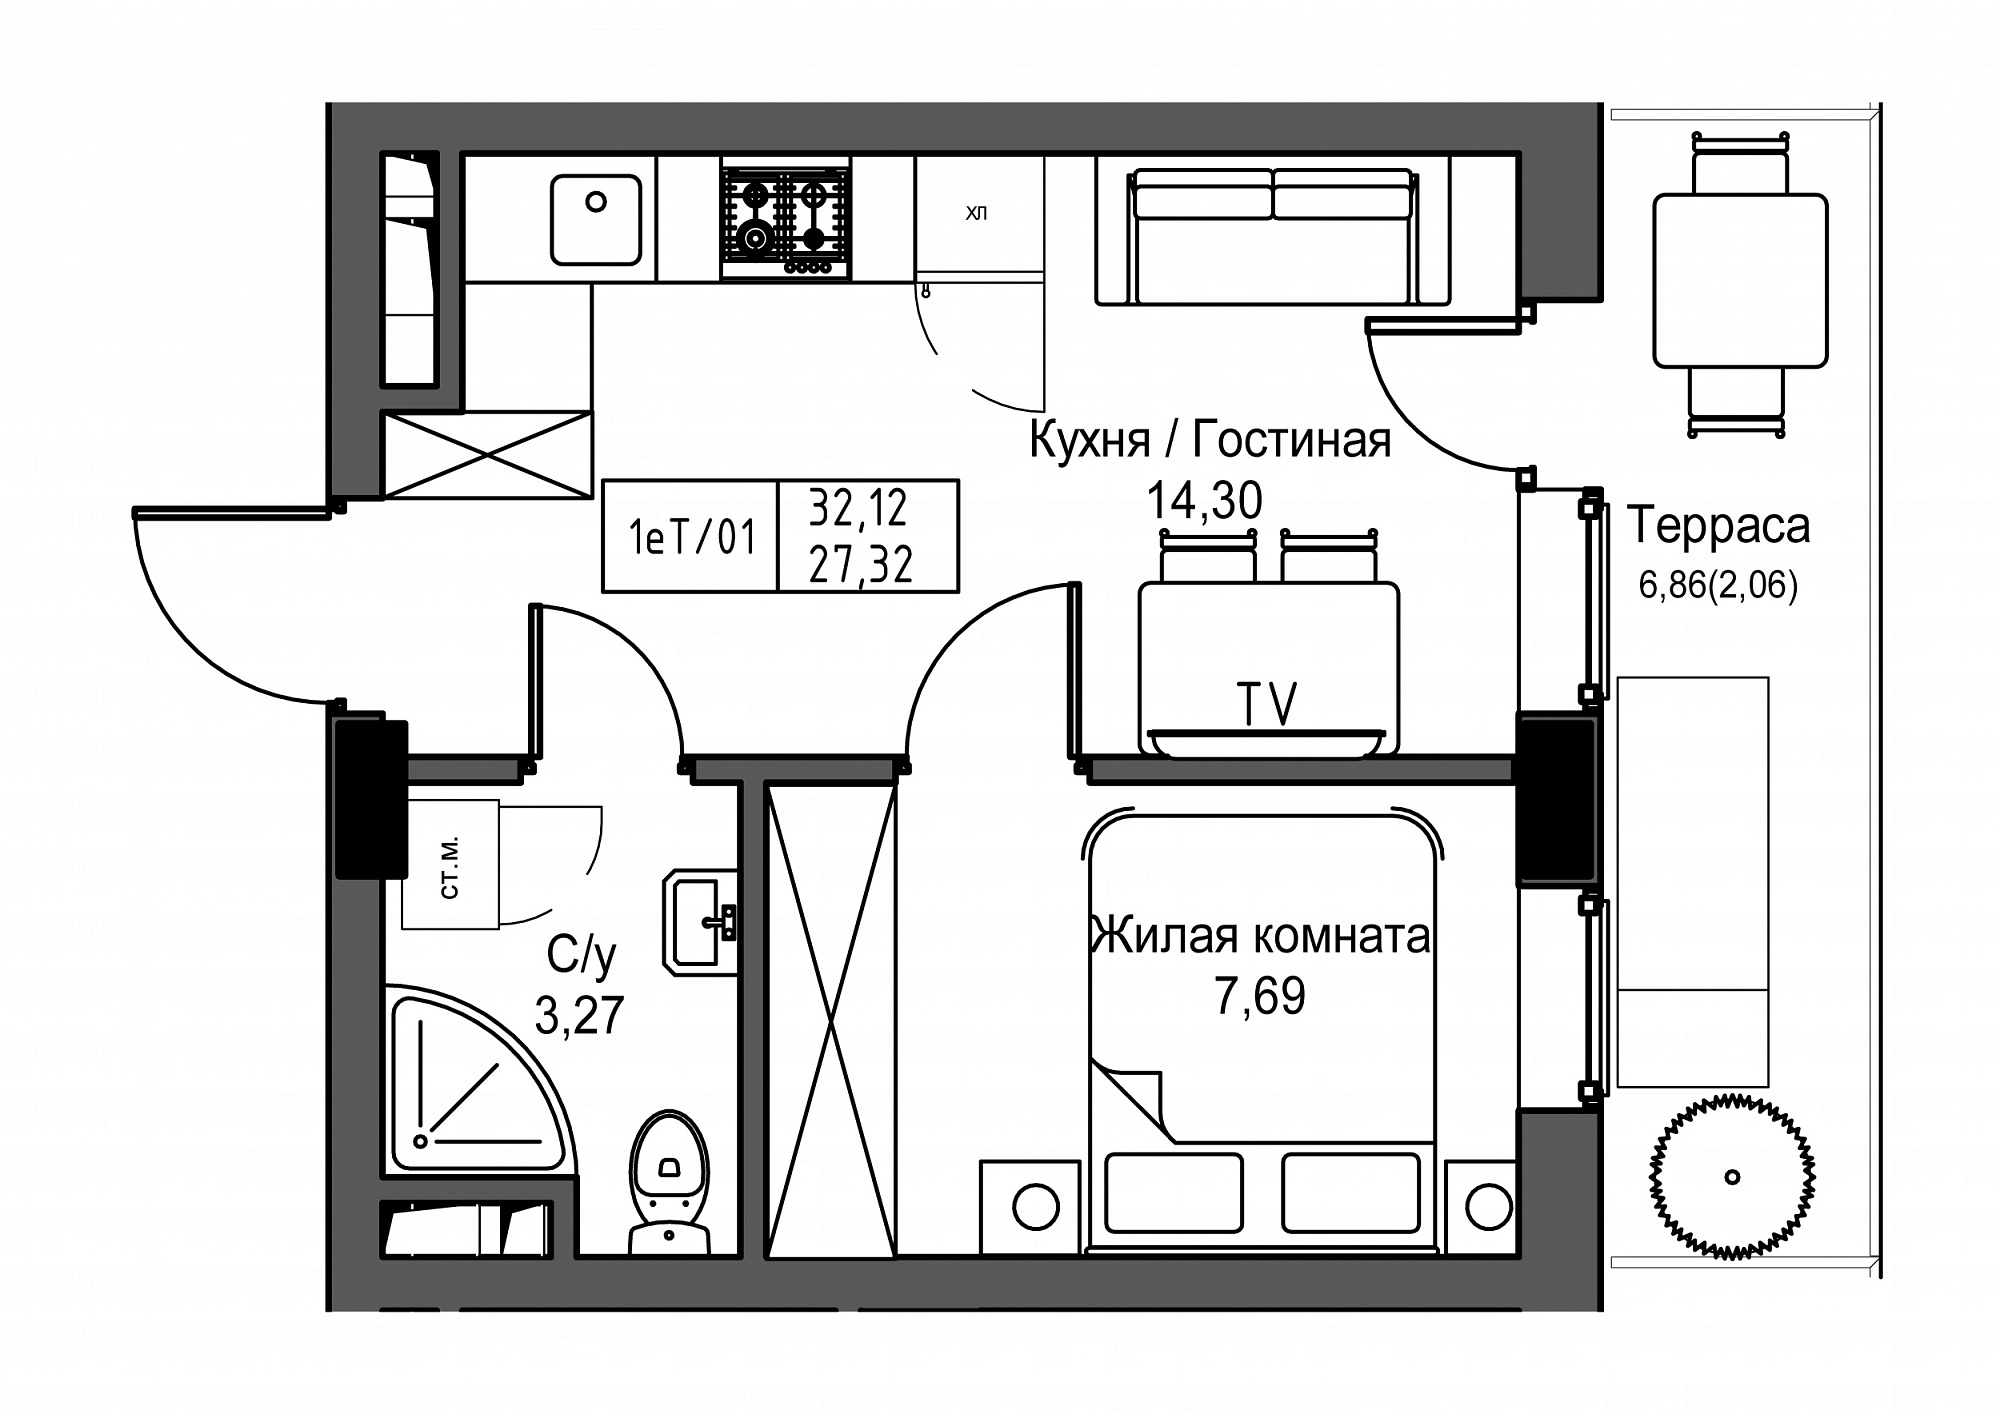 Планування 1-к квартира площею 27.32м2, UM-003-02/0004.